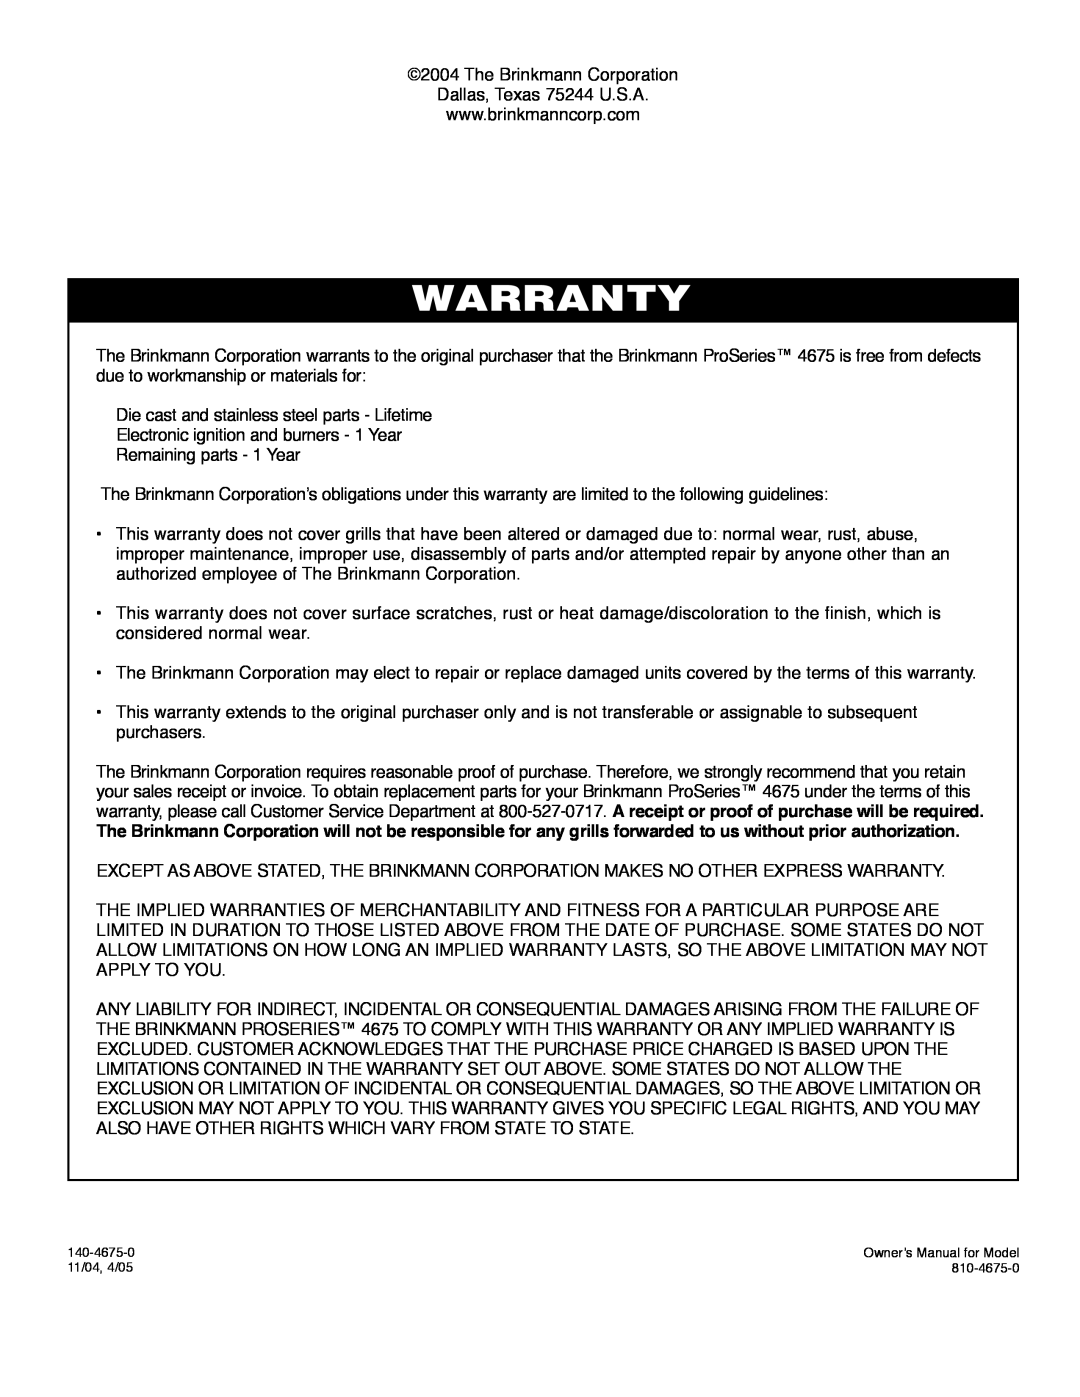 Brinkmann ProSeries 4675 owner manual Warranty 